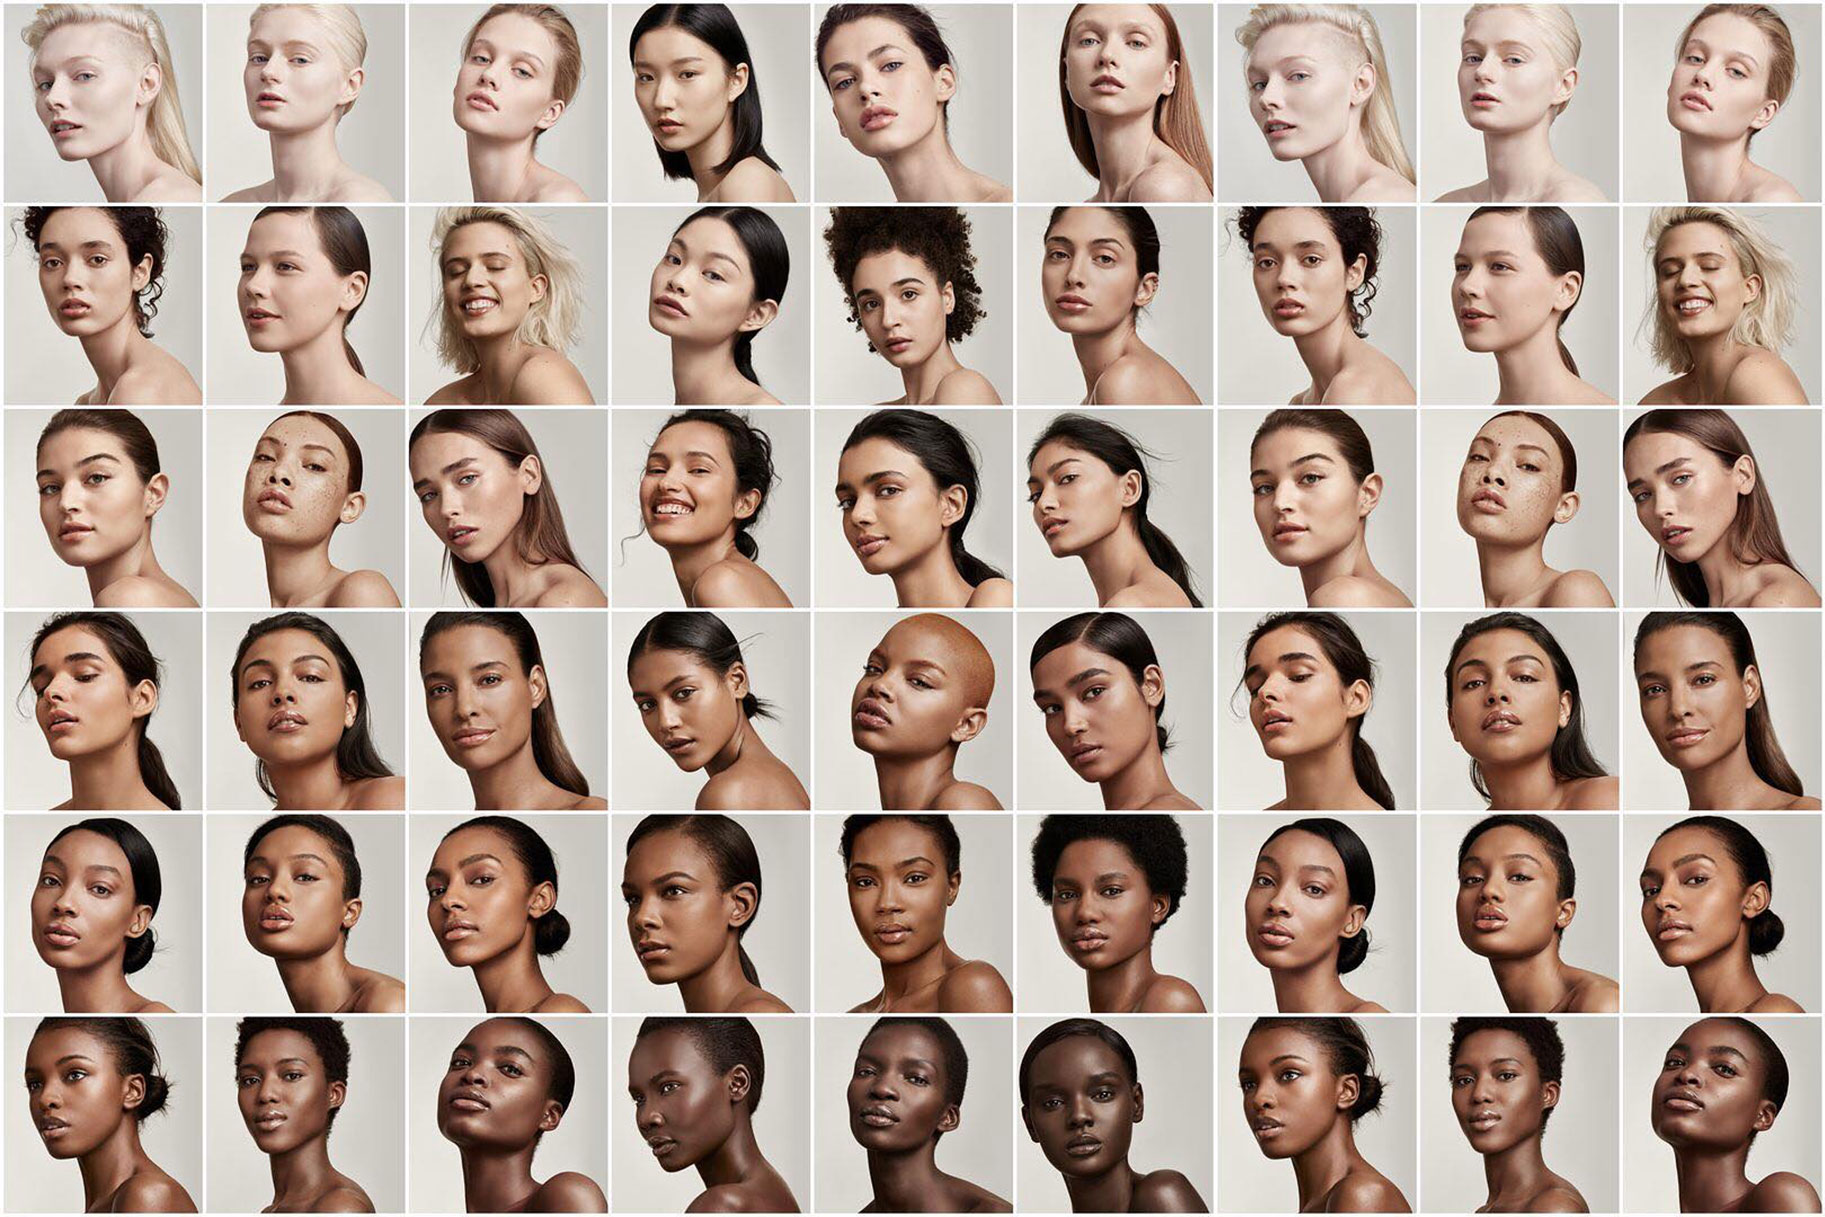 Fenty Beauty Launches 40 Foundation Shades for Light and Dark Skin - Rihanna  Fenty Makeup